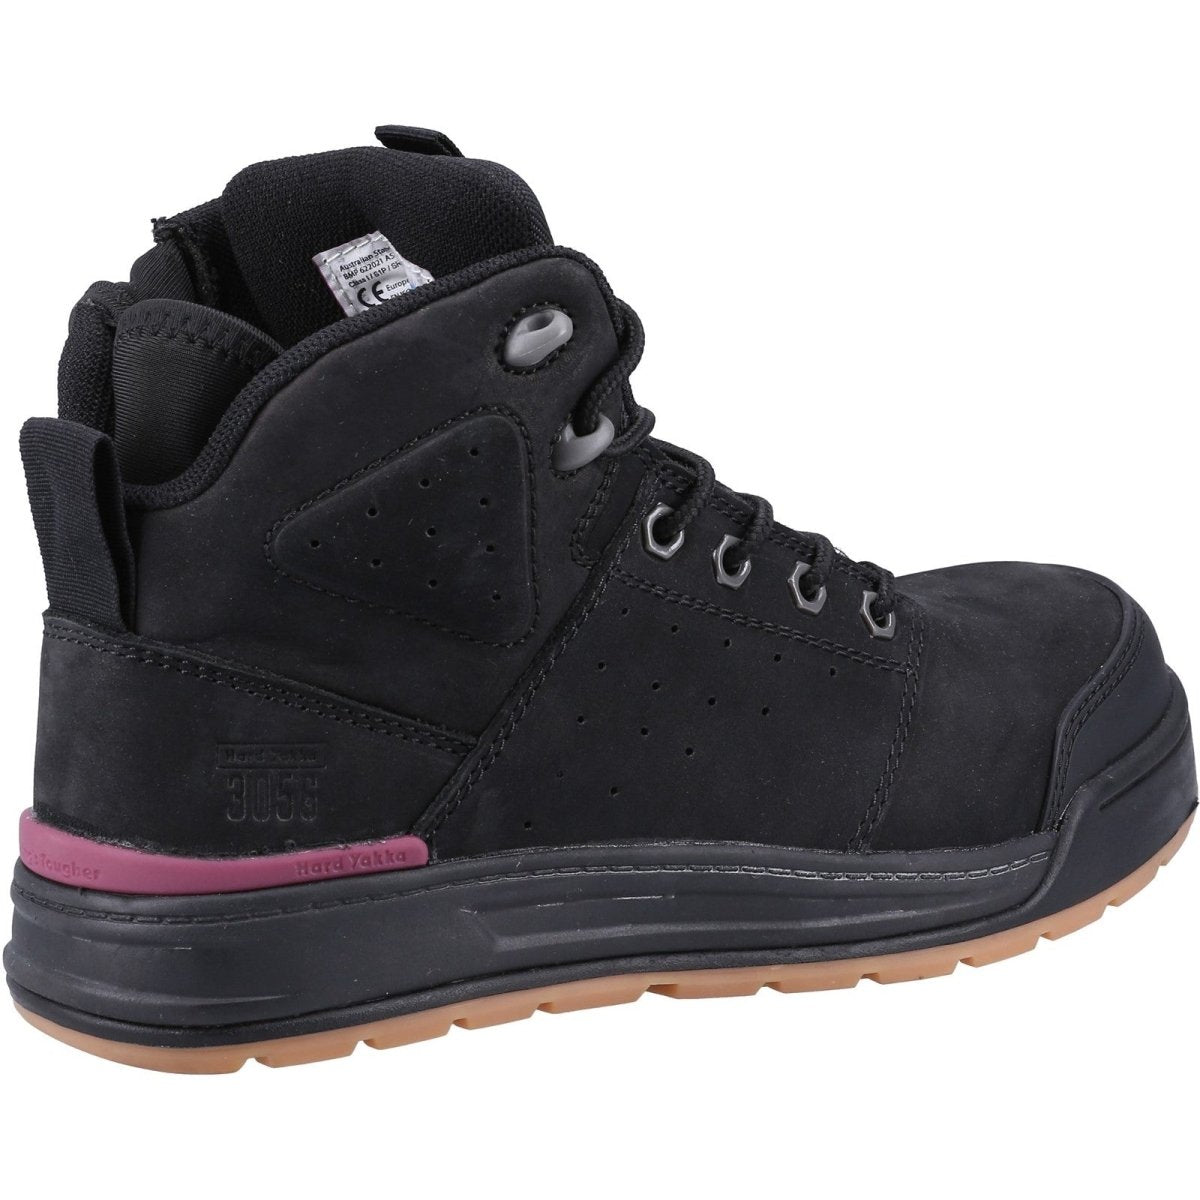 Hard Yakka 3056 PR Ladies Side-Zip Composite Safety Boots - Shoe Store Direct